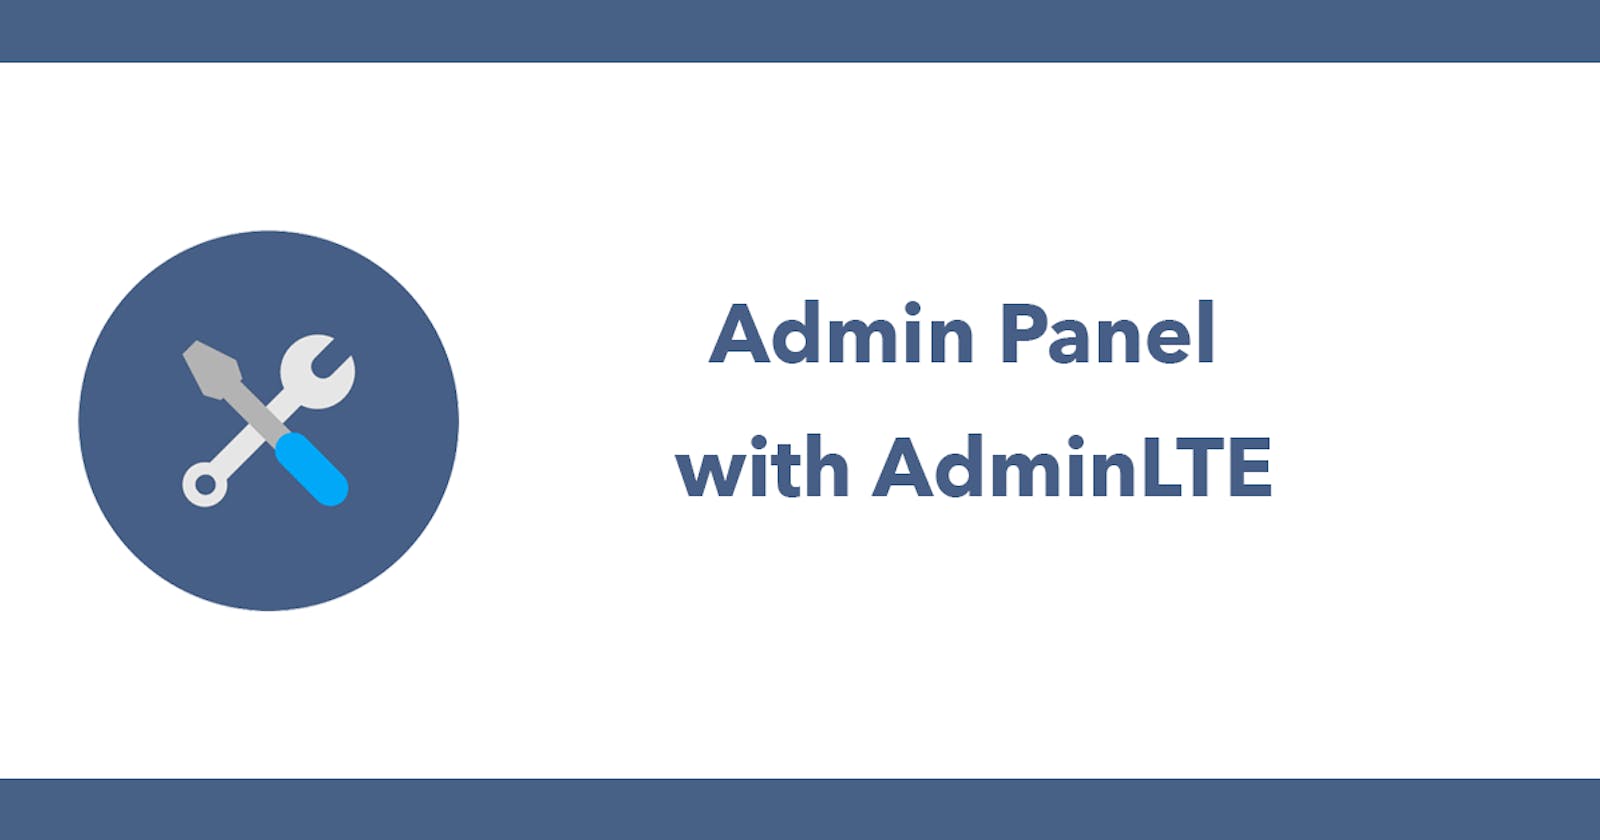 Admin Panel with AdminLTE